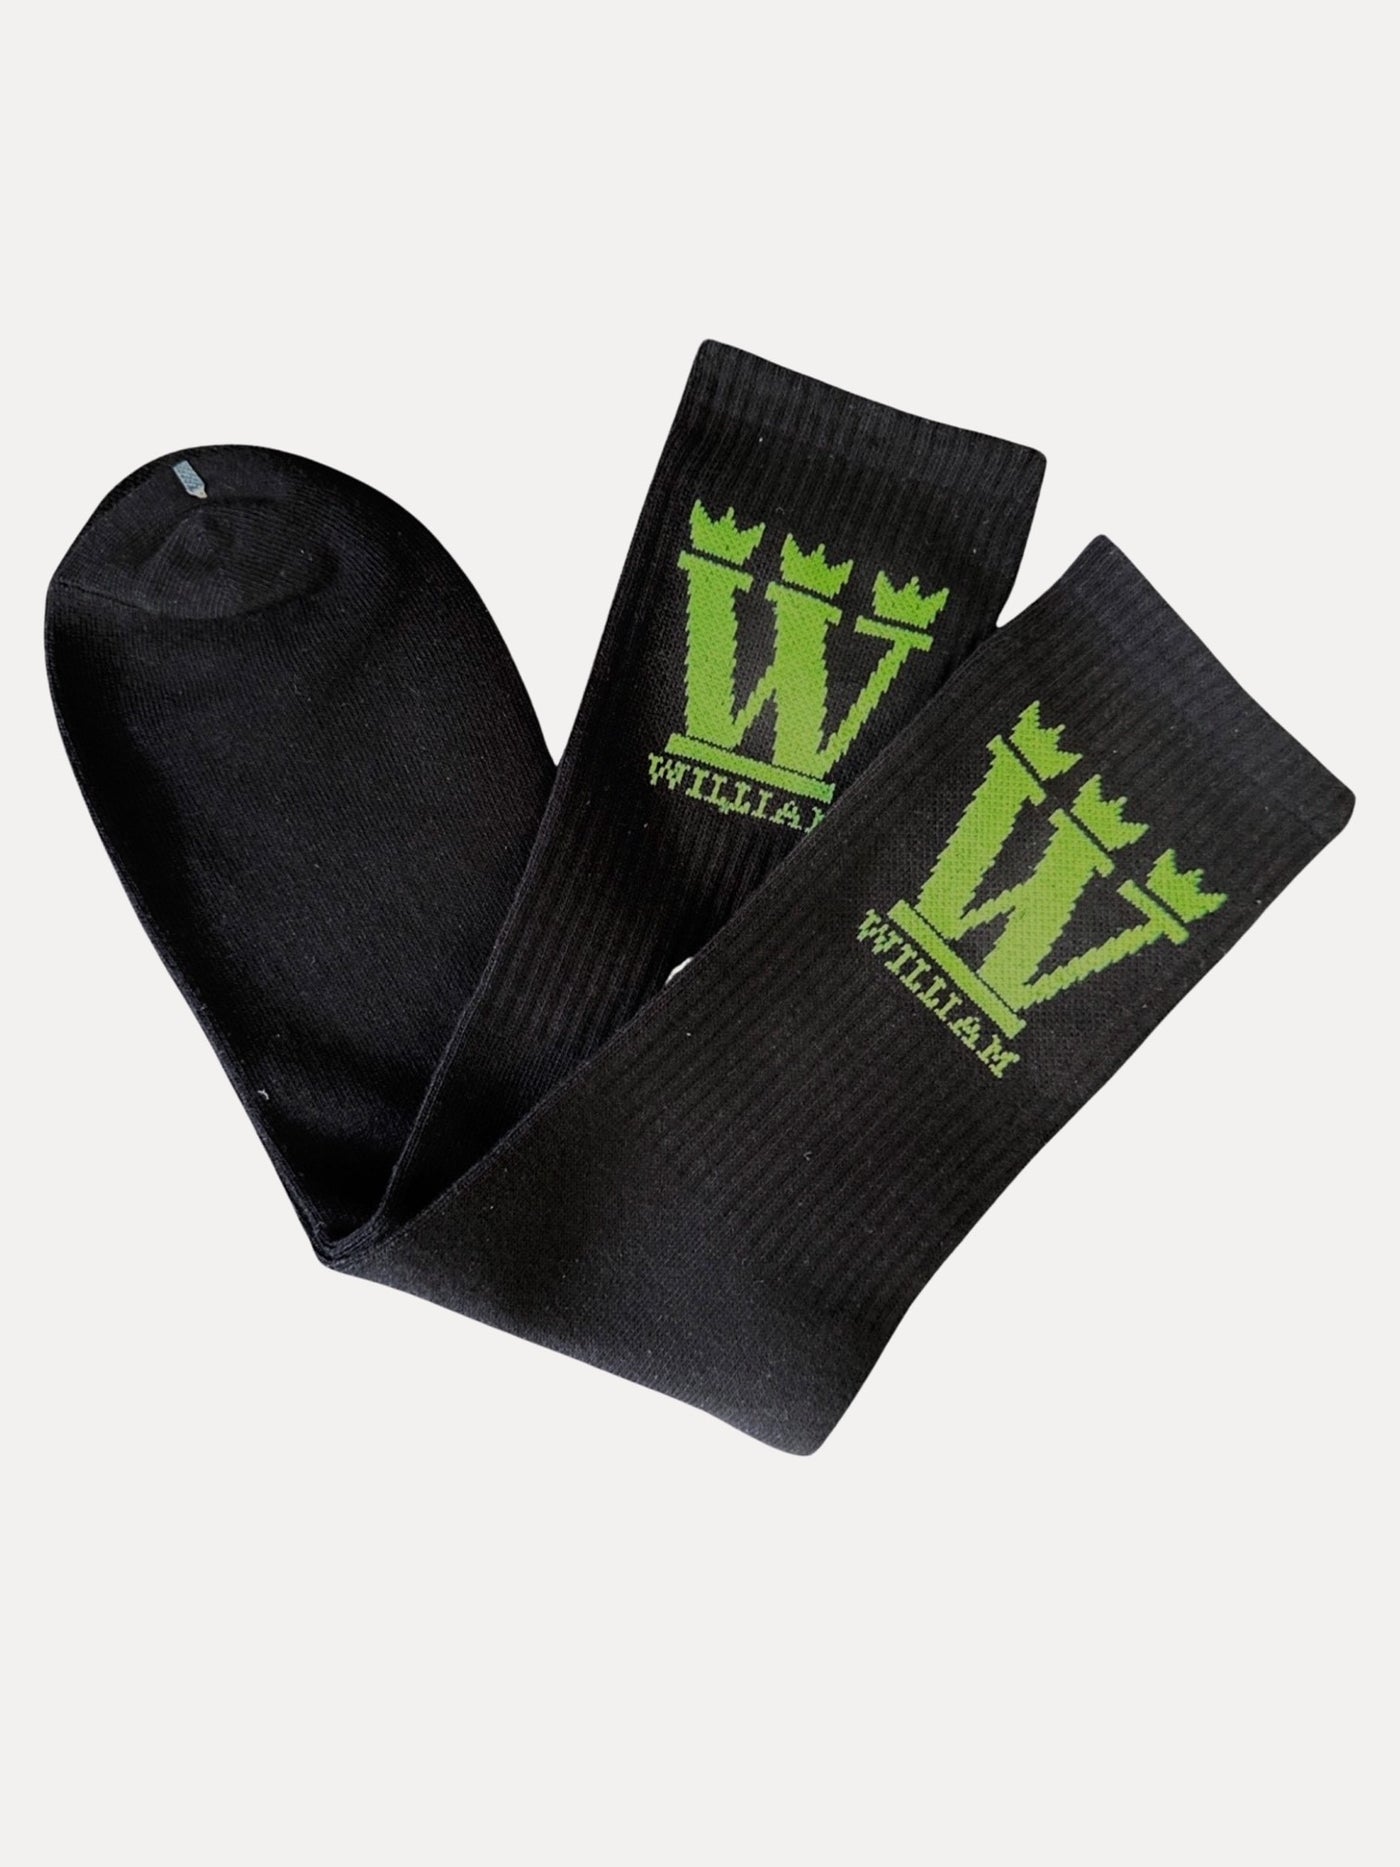 WILLIAM Socks Black - Neon Green